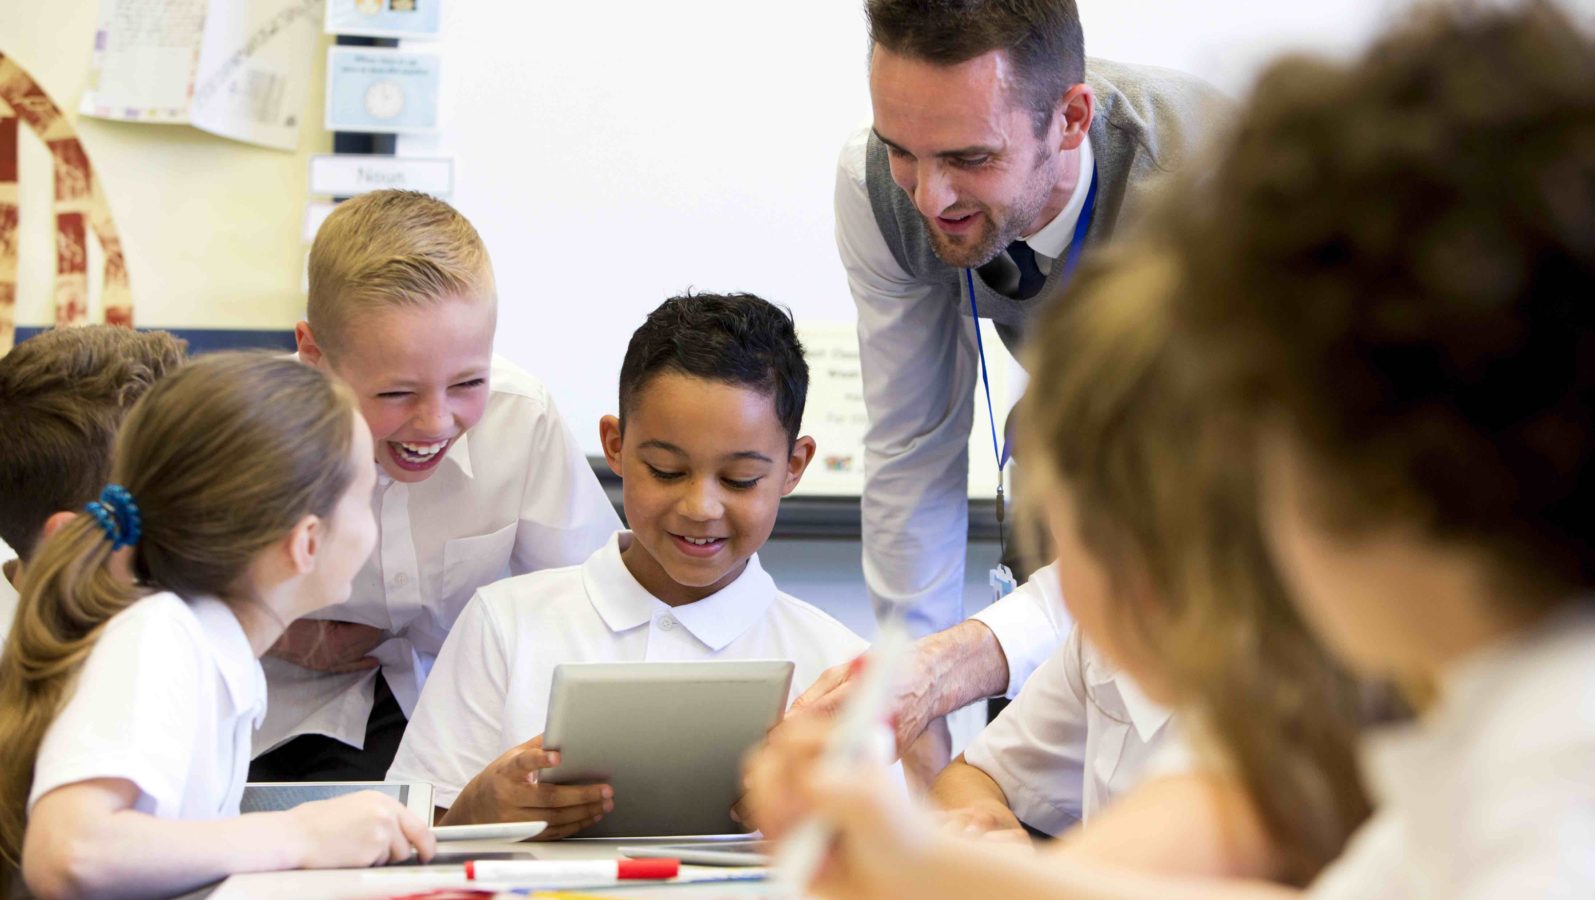 Male teacher supervising a group of children on digital tablets